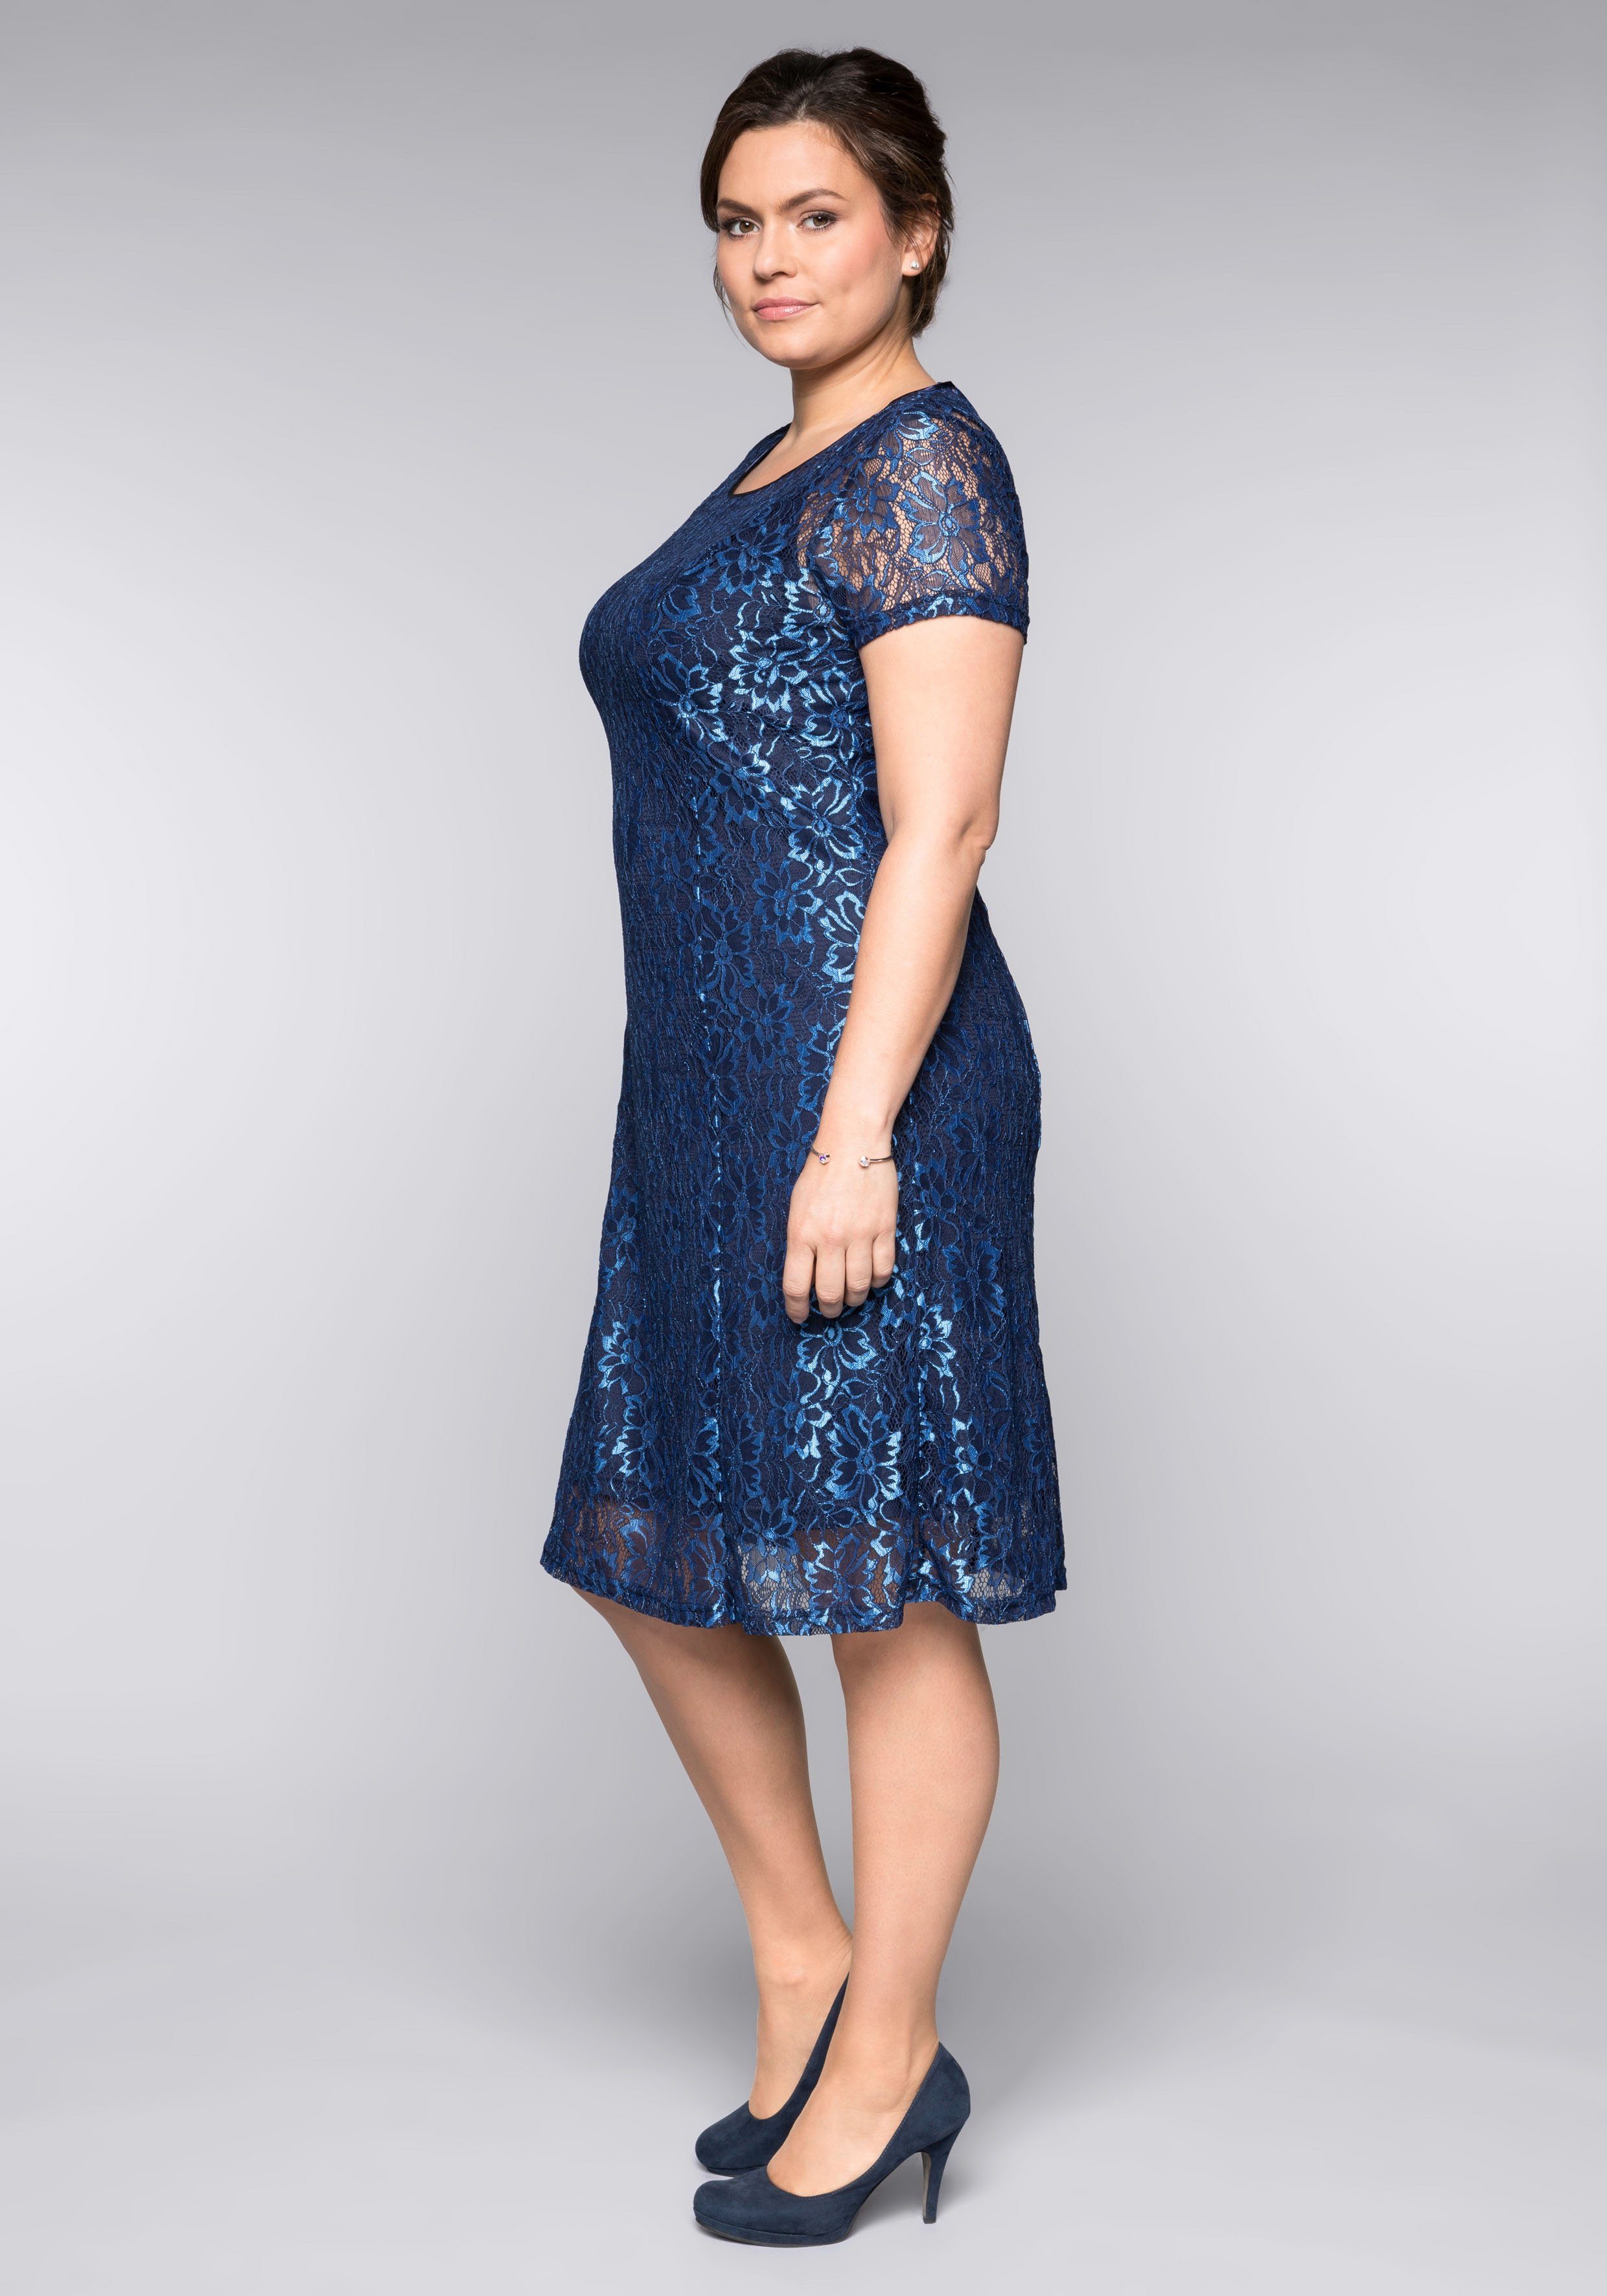 Betere Sheego kanten jurk makkelijk besteld | OTTO GY-06